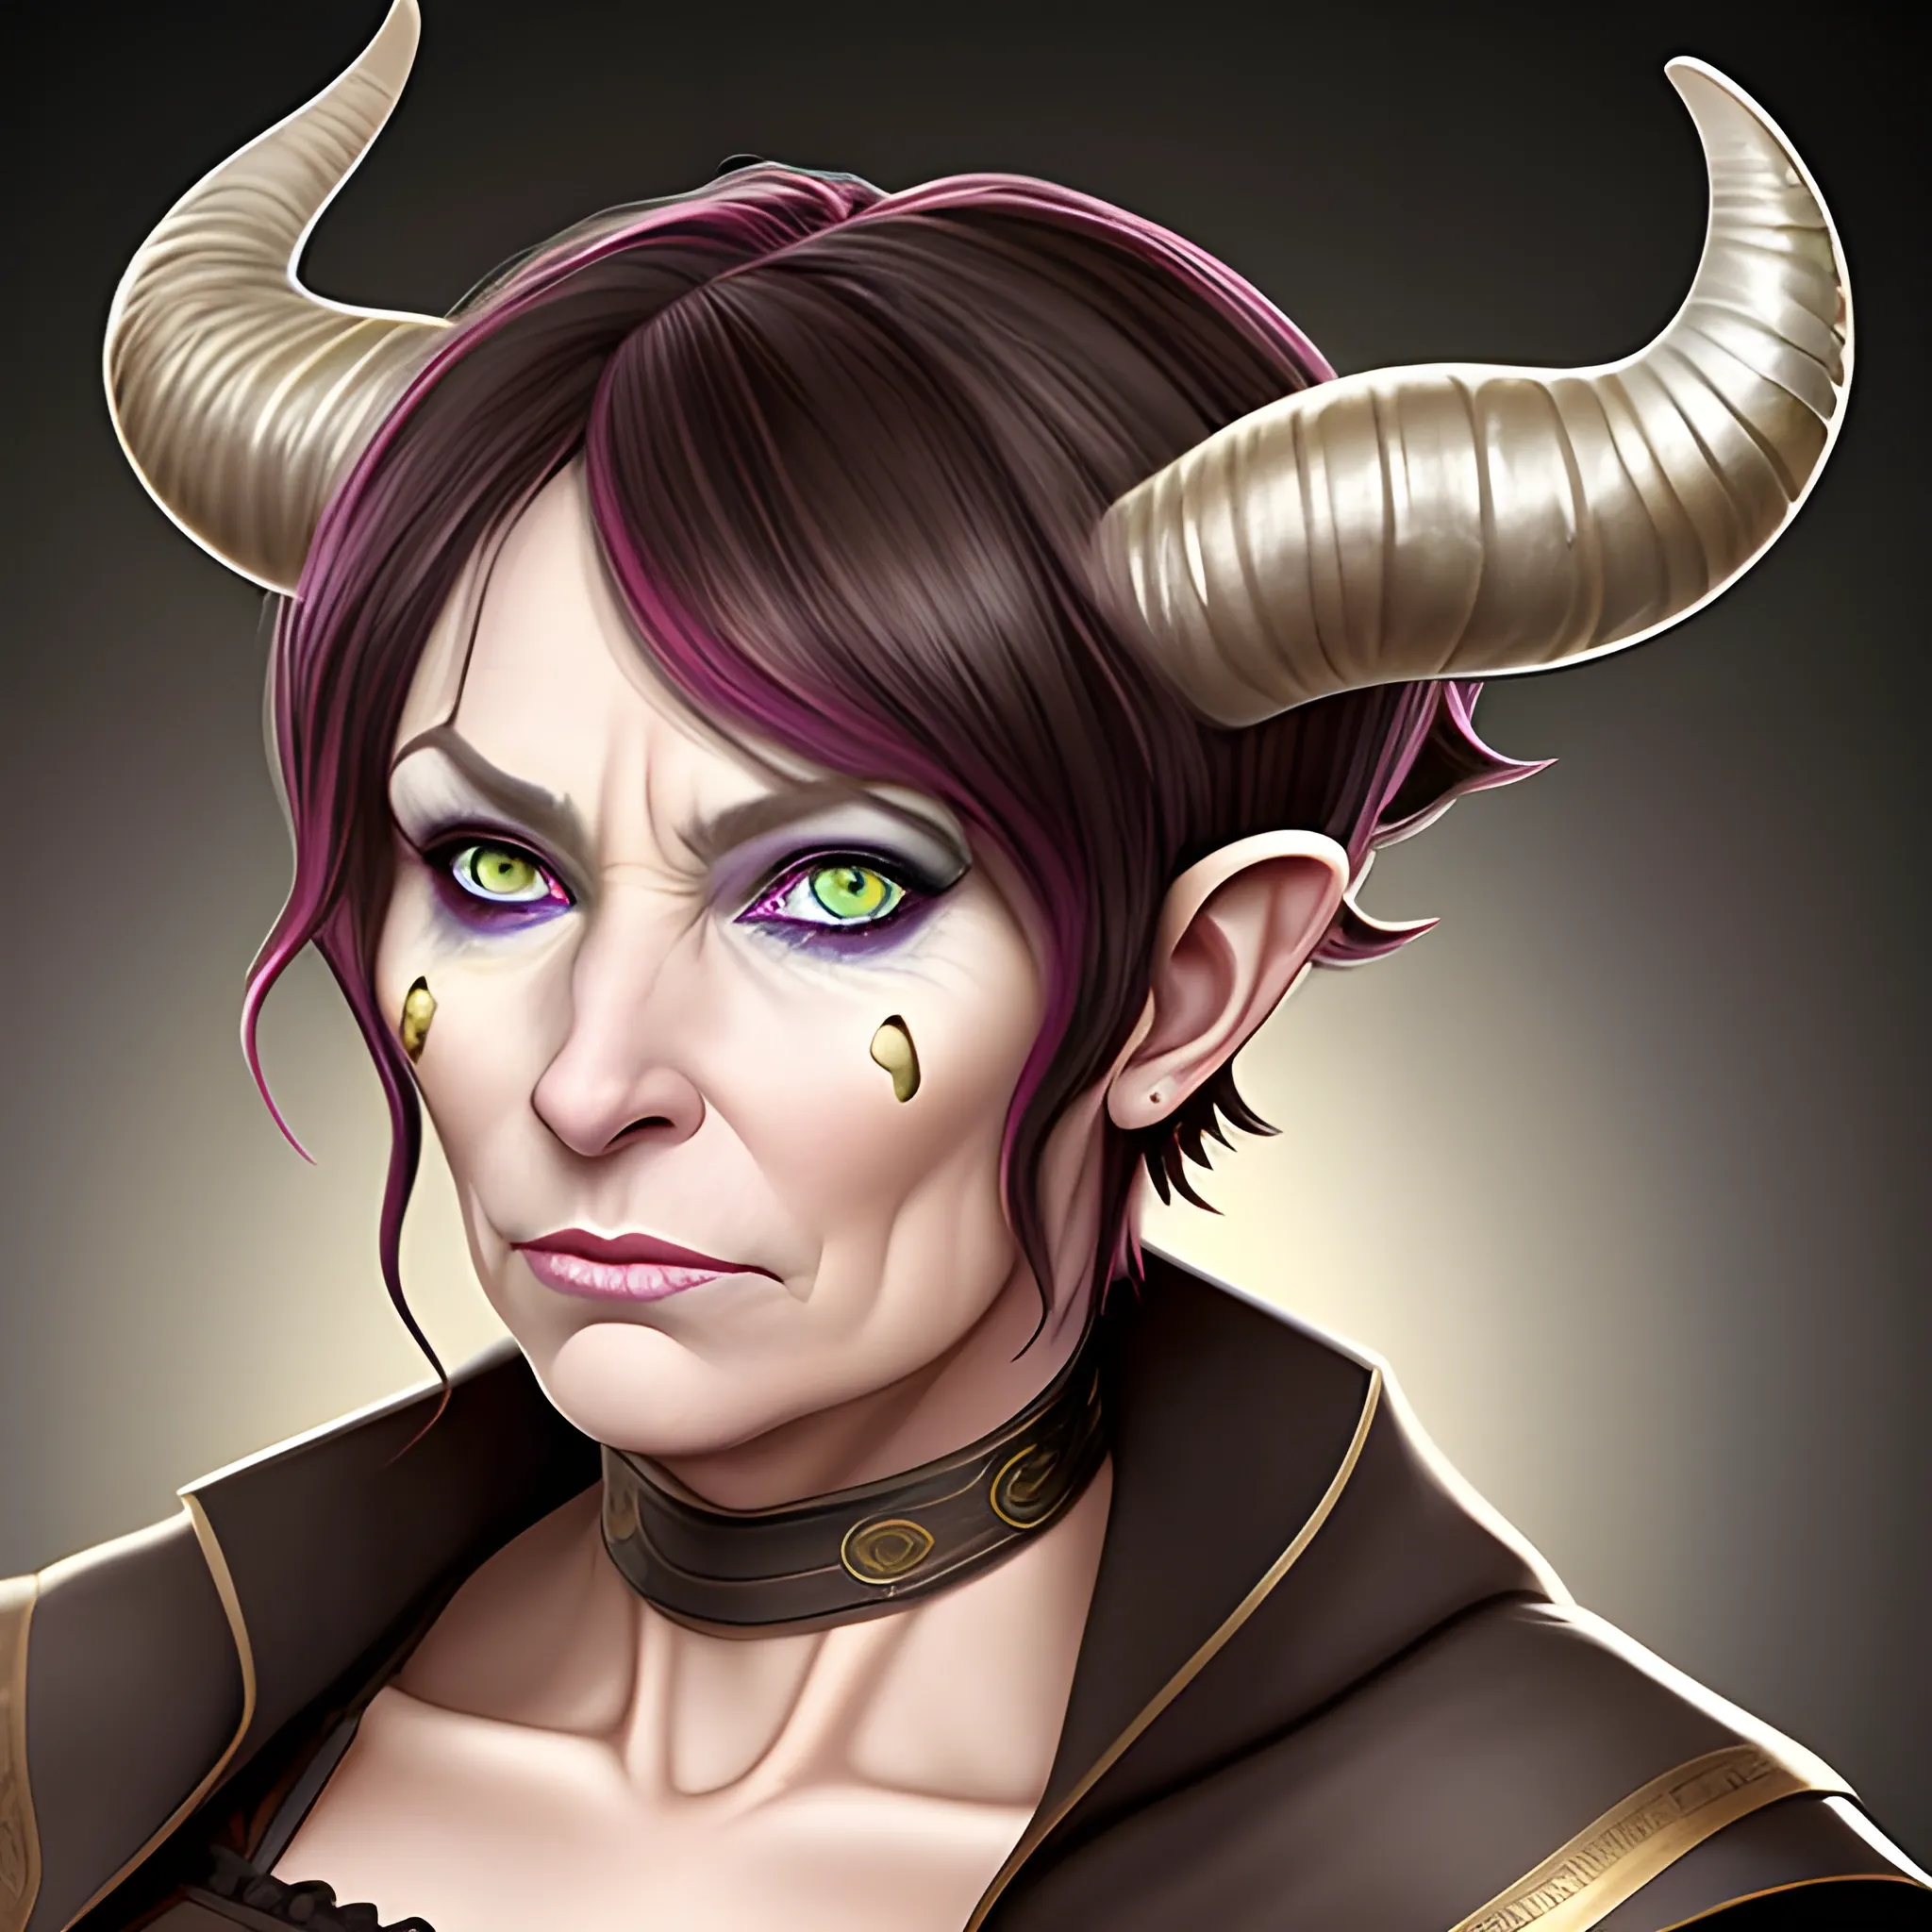 middle-aged woman, large horns, heterochromia, brunette hair
, tiefling